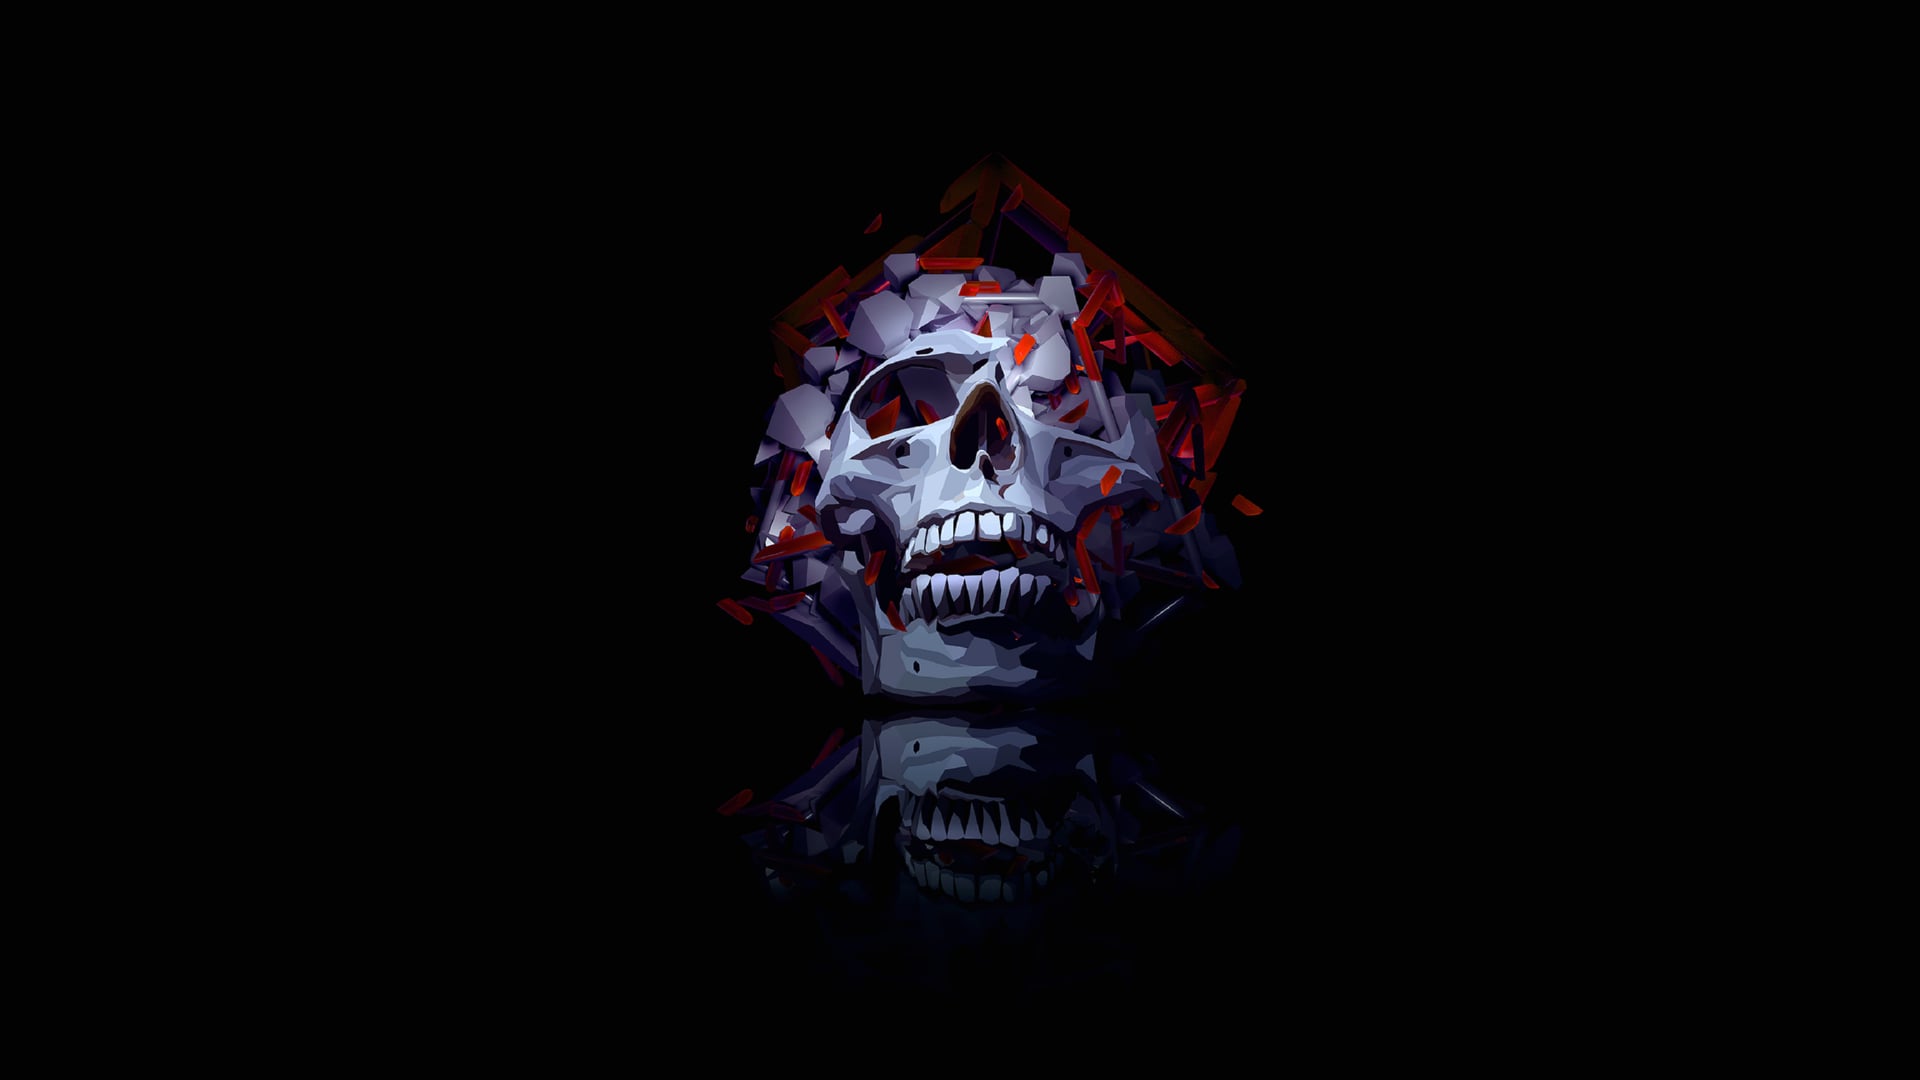 Digital Art Skull at 1024 x 768 size wallpapers HD quality